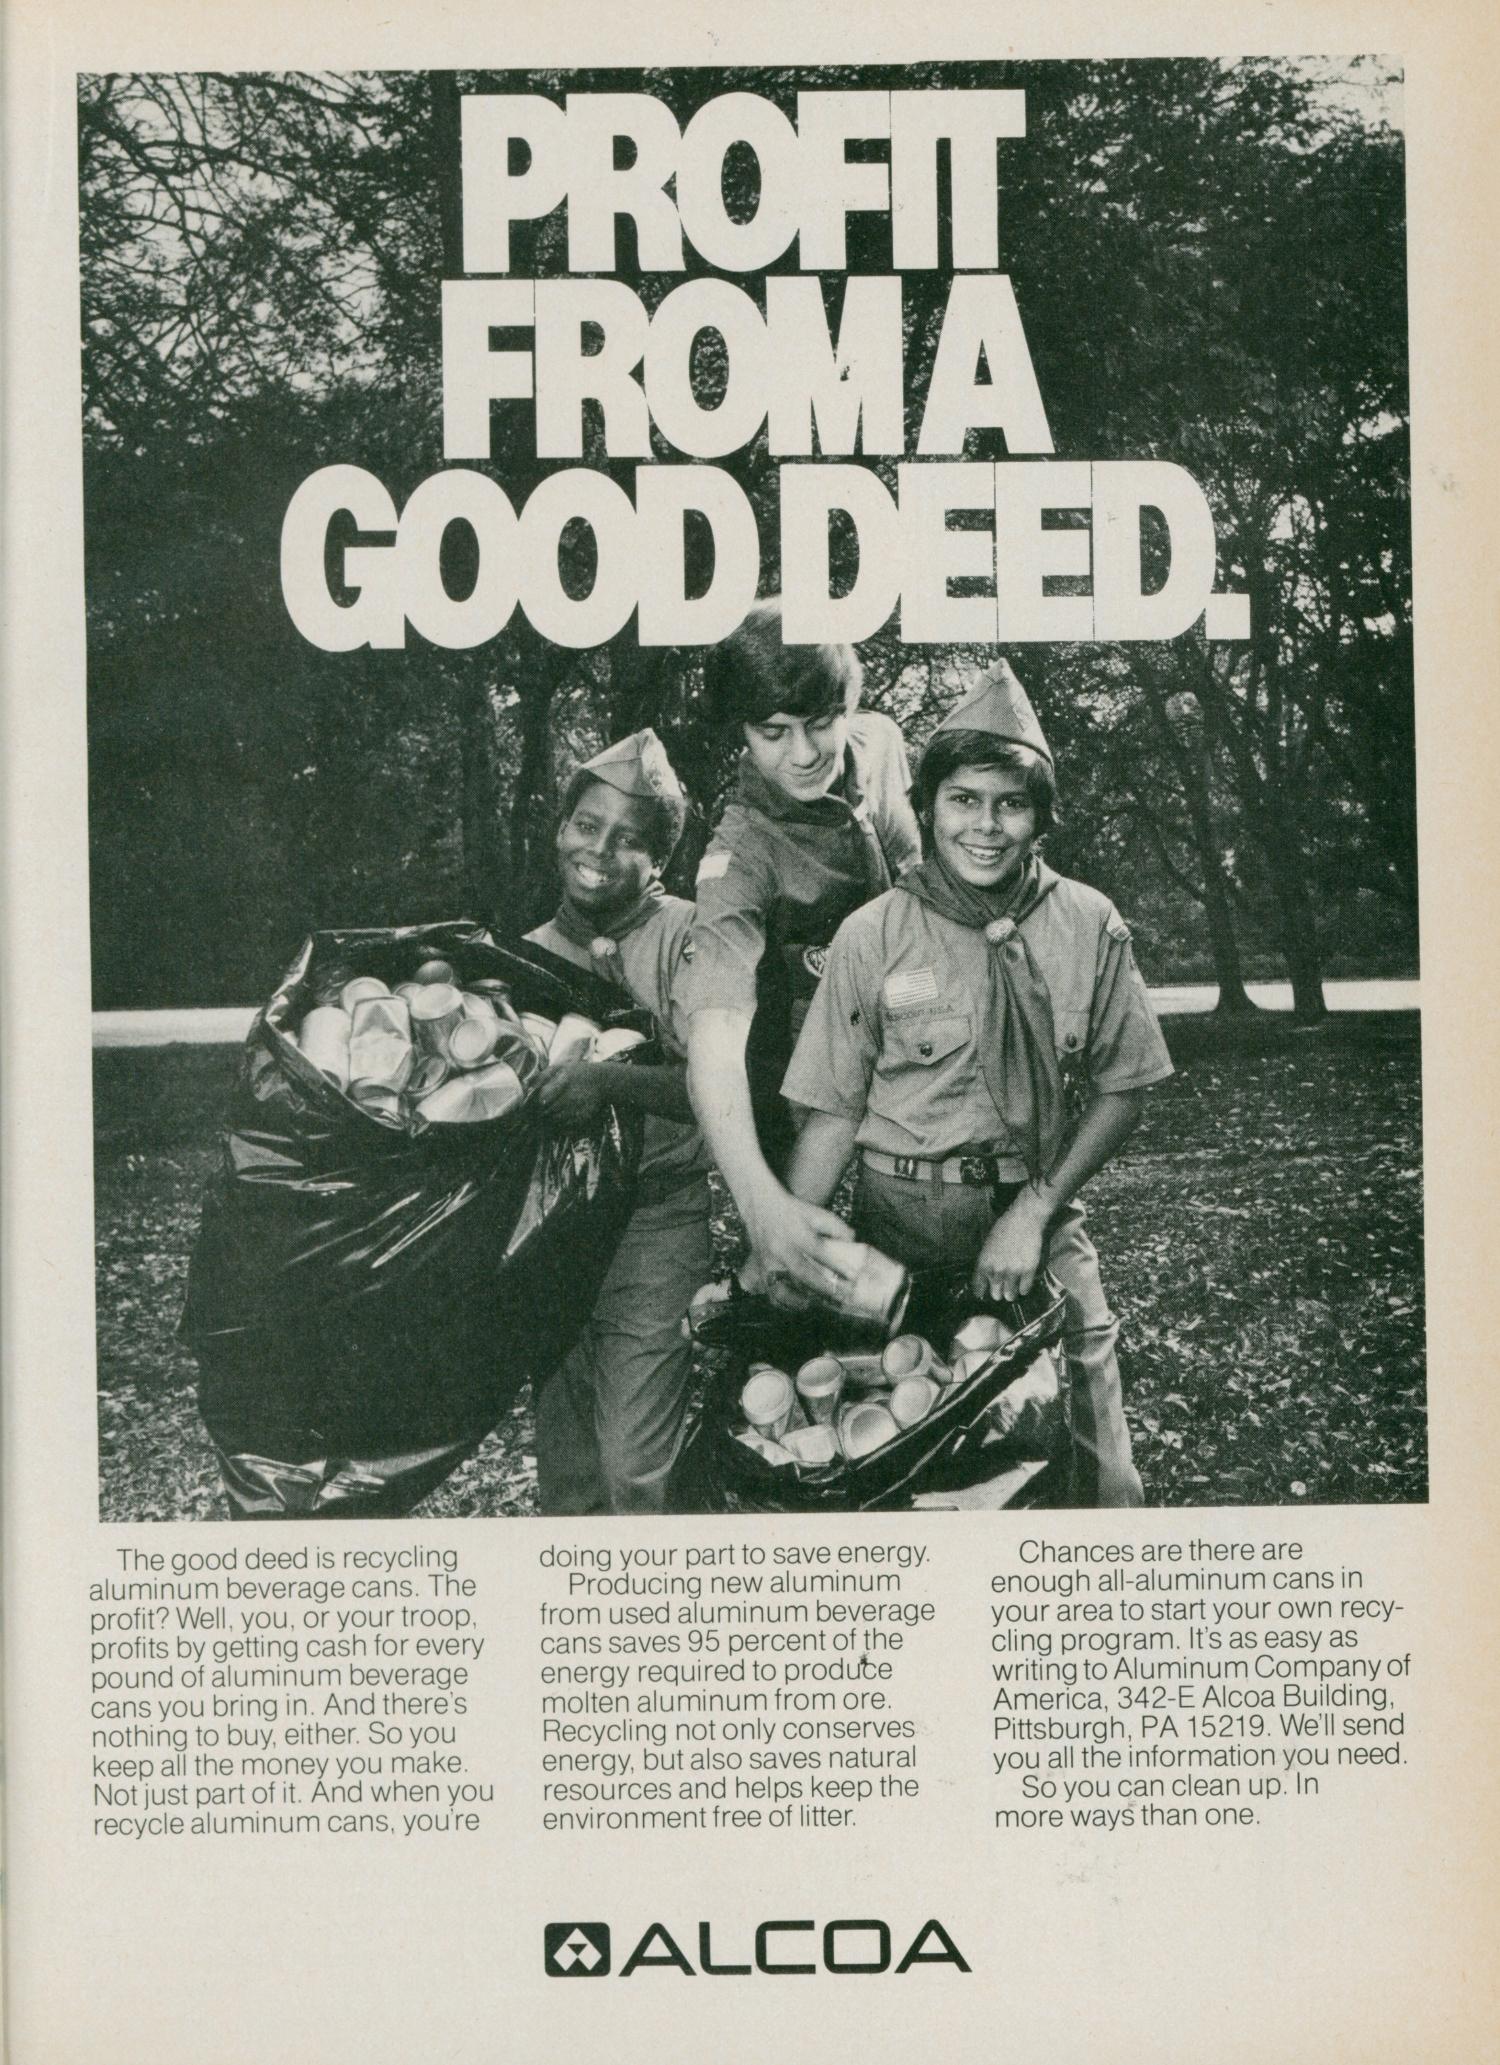 Scouting, Volume 68, Number 4, September 1980
                                                
                                                    67
                                                